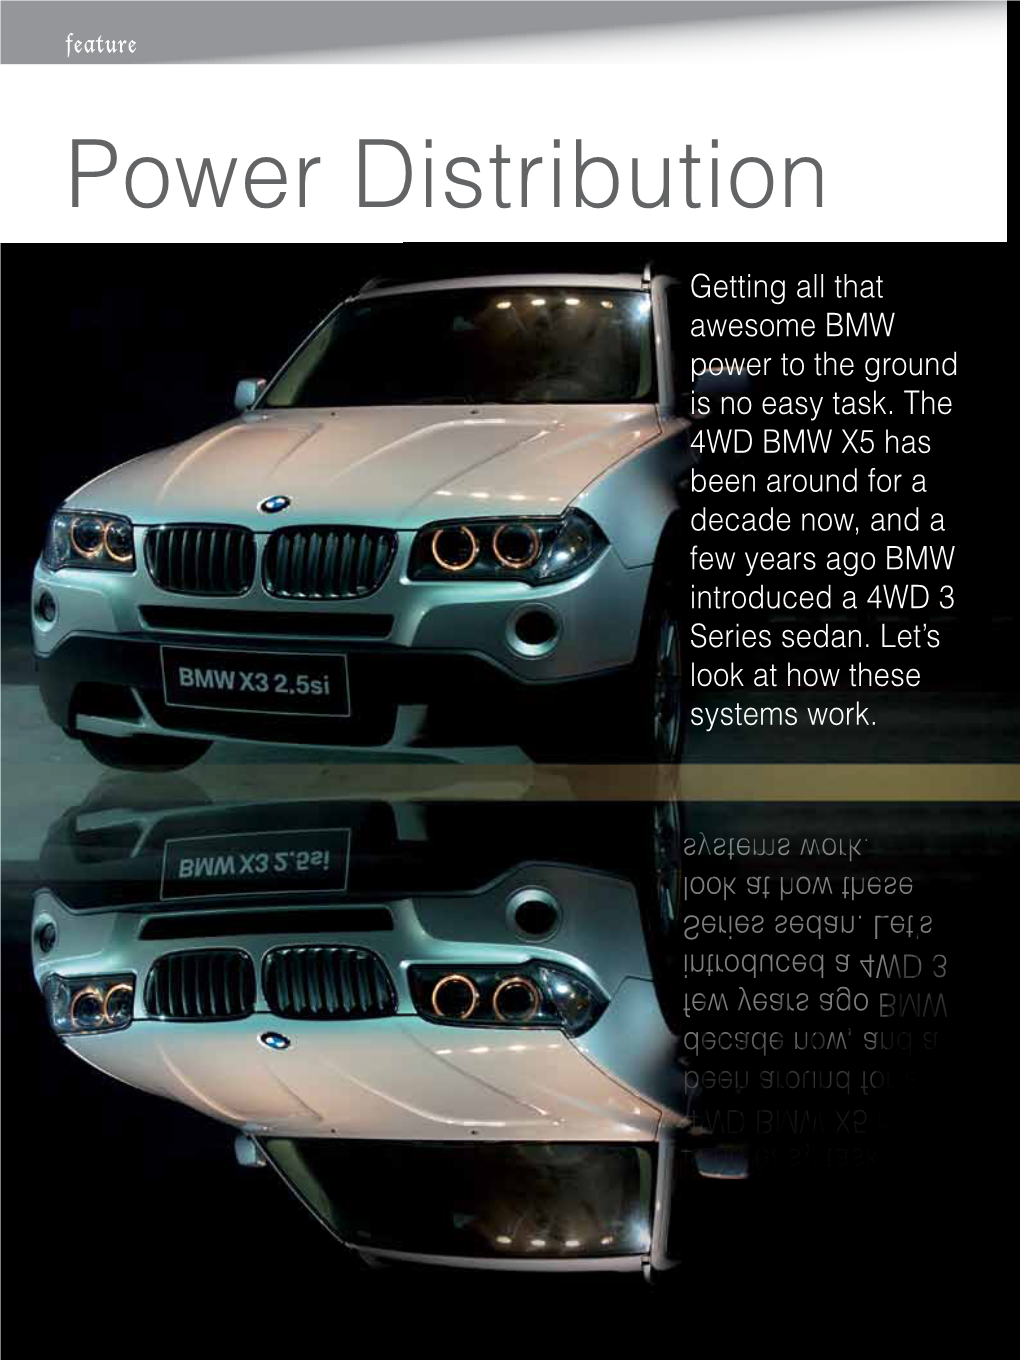 Power Distribution